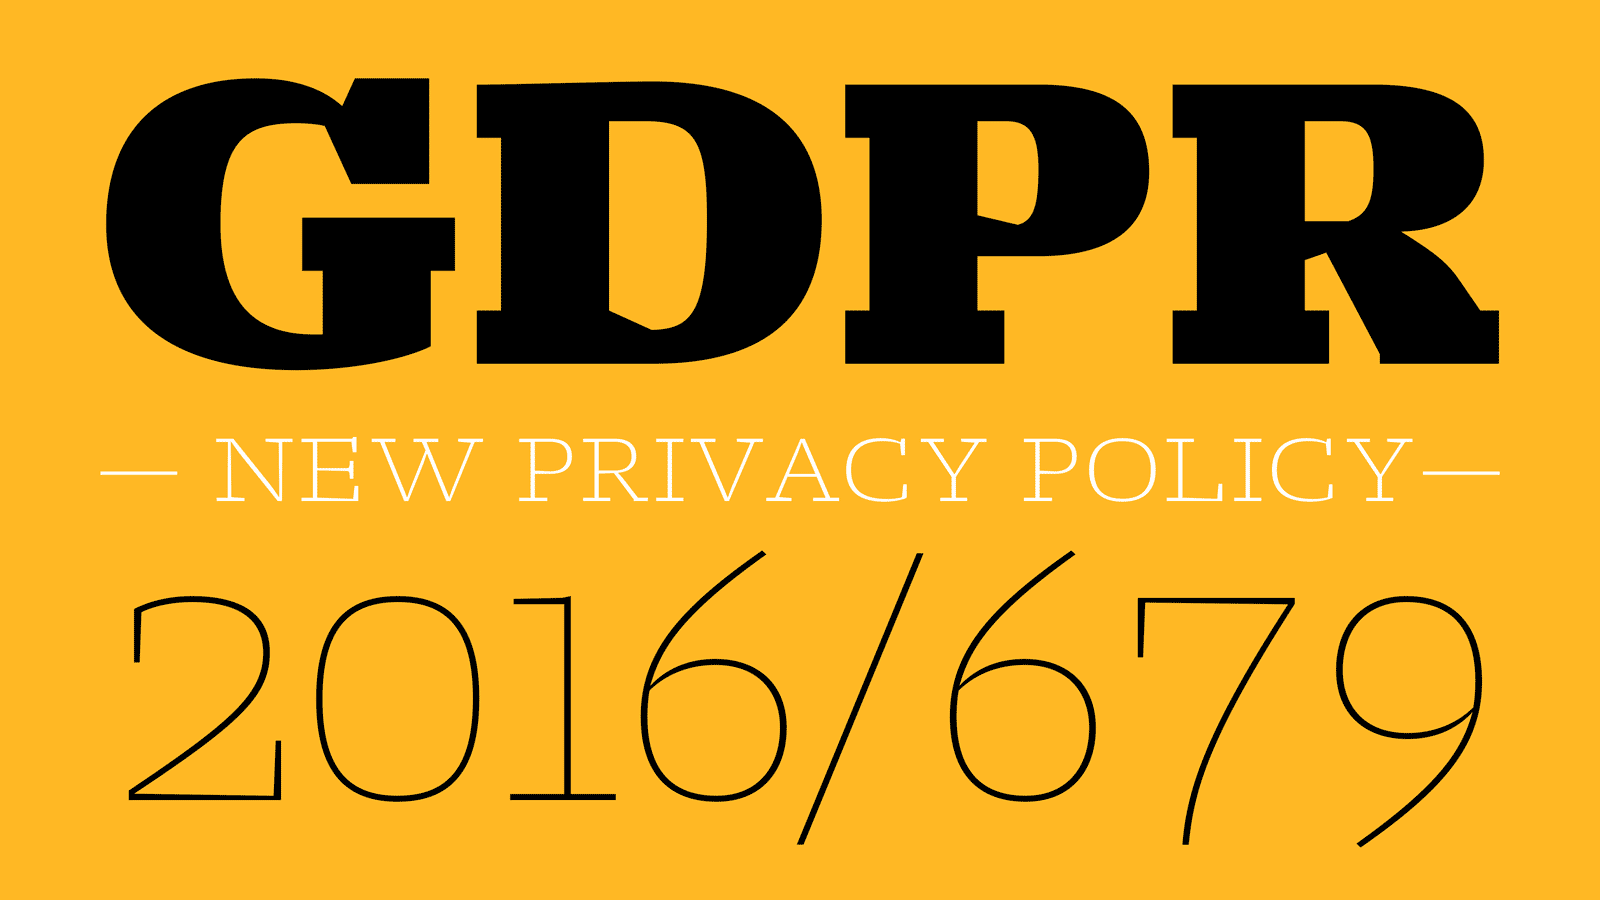 Privacy policy – GDPR